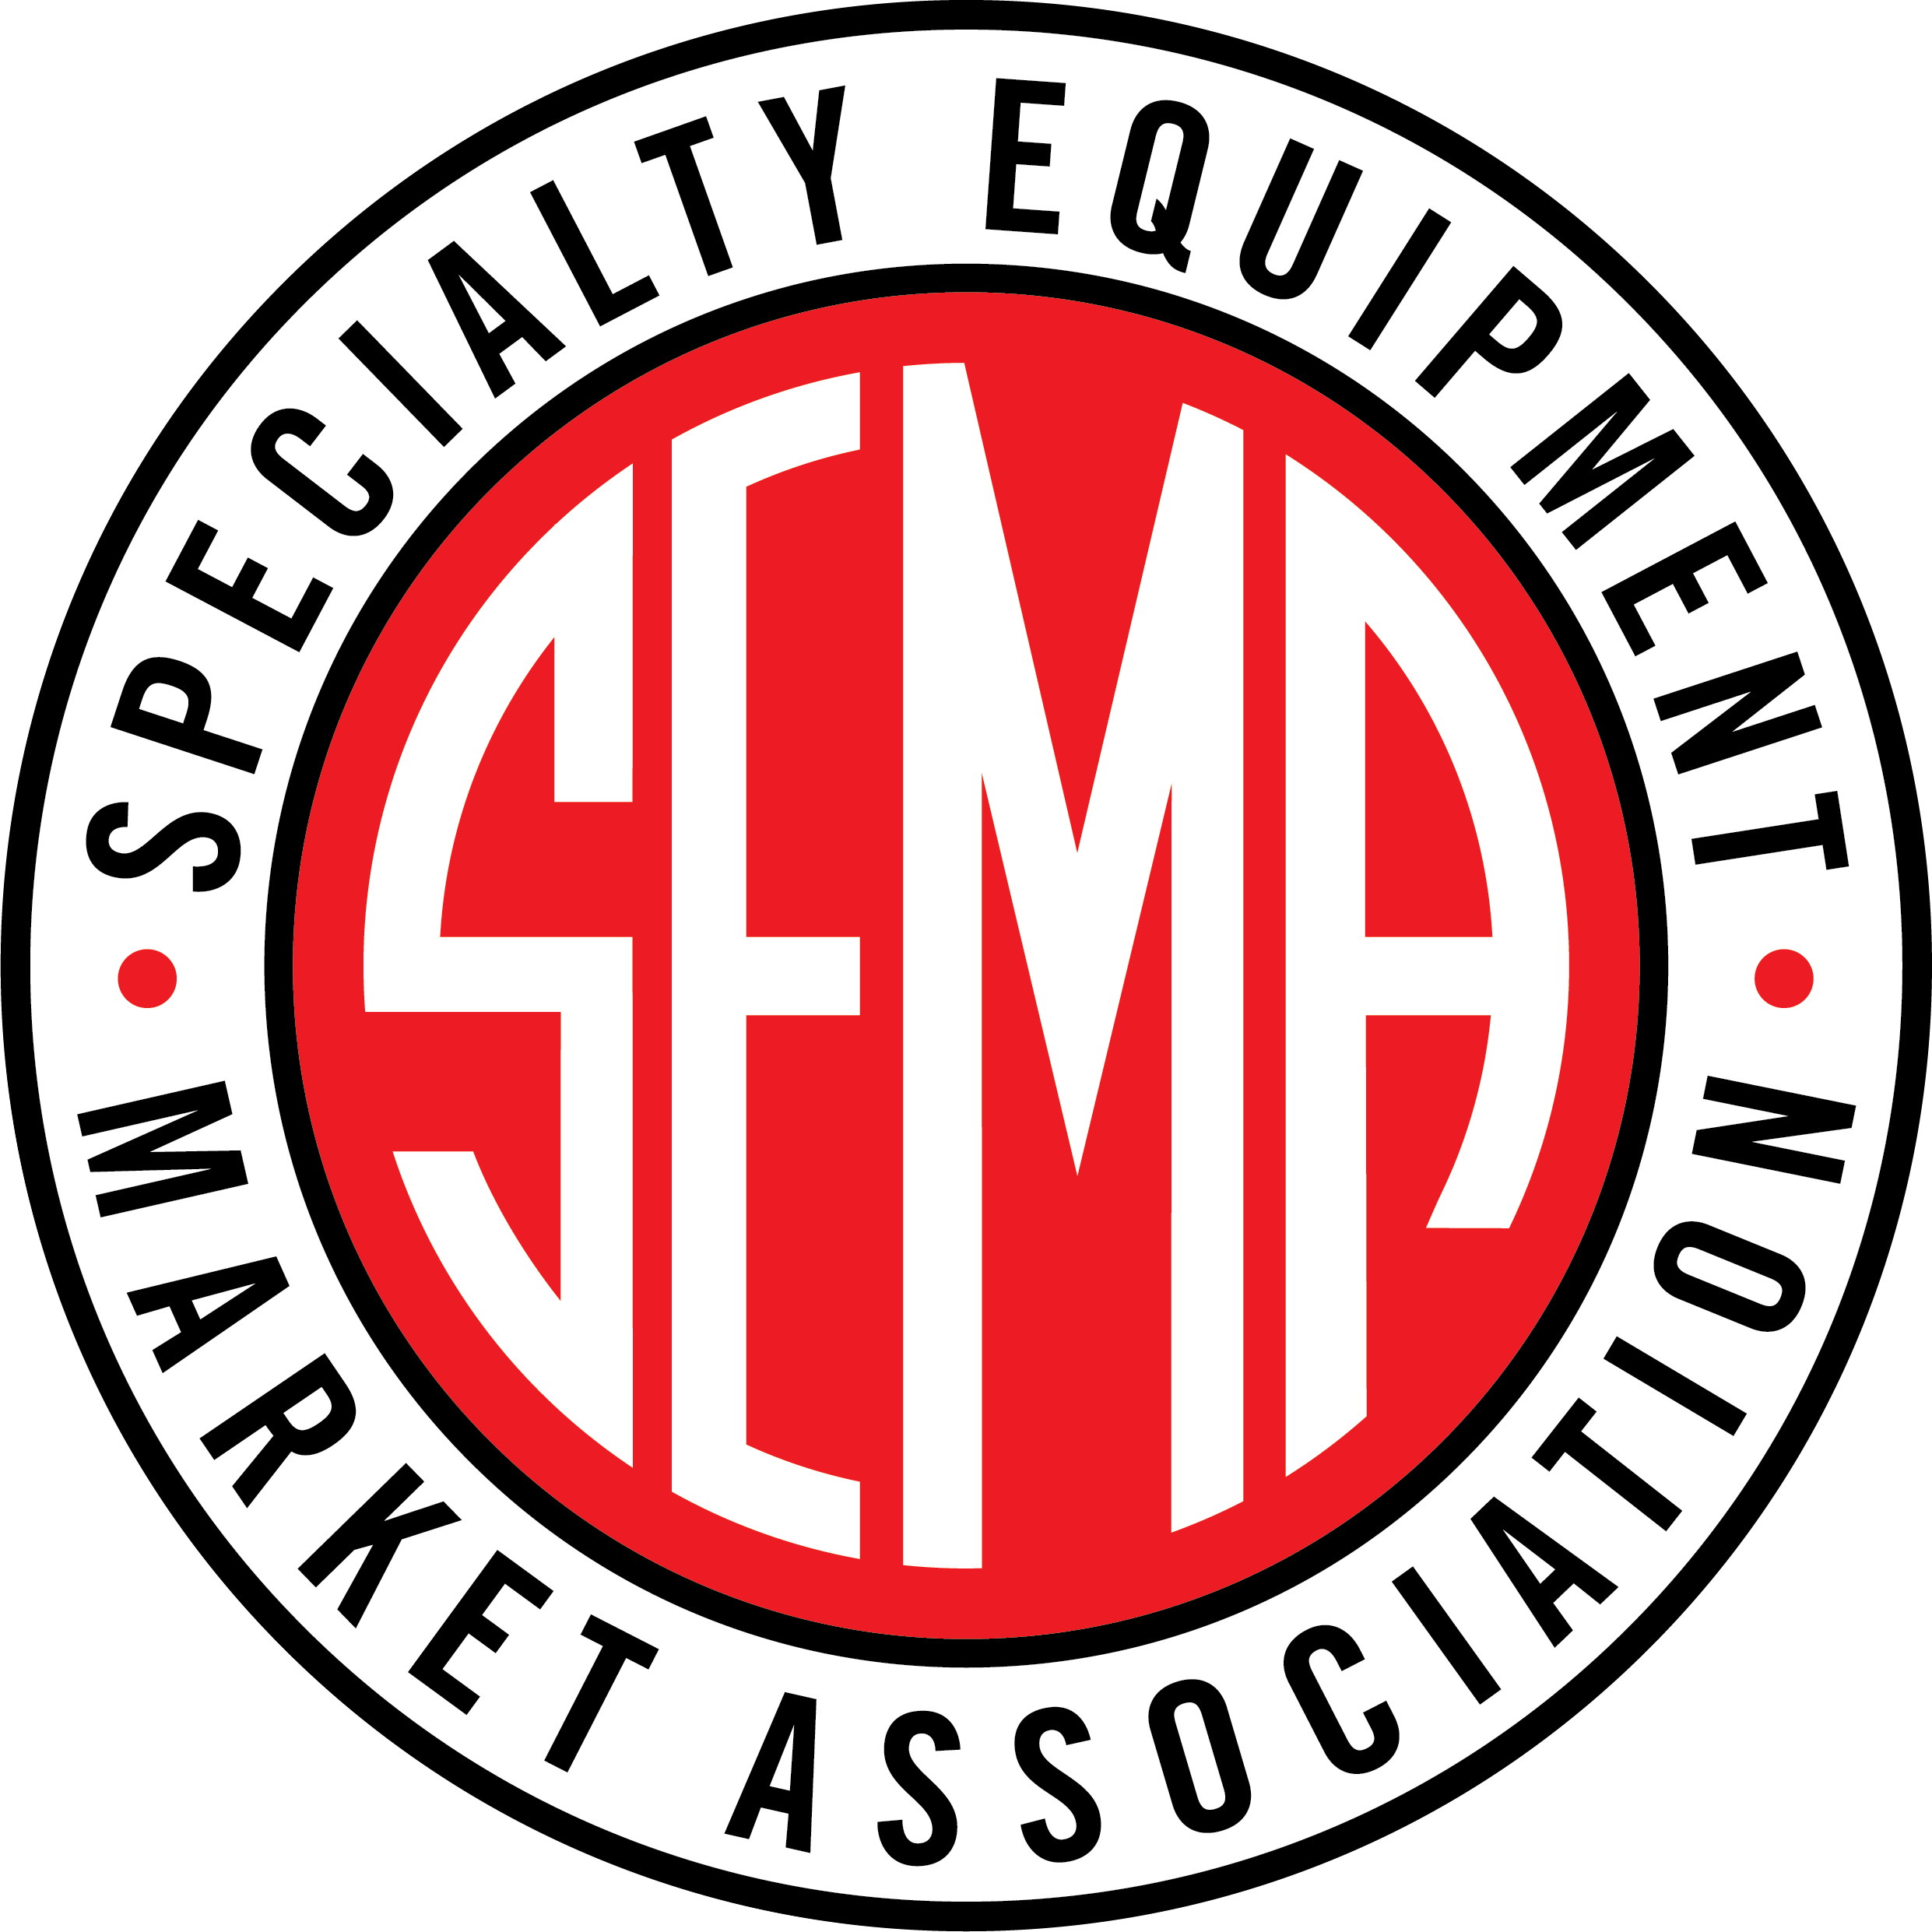 SEMA-logo